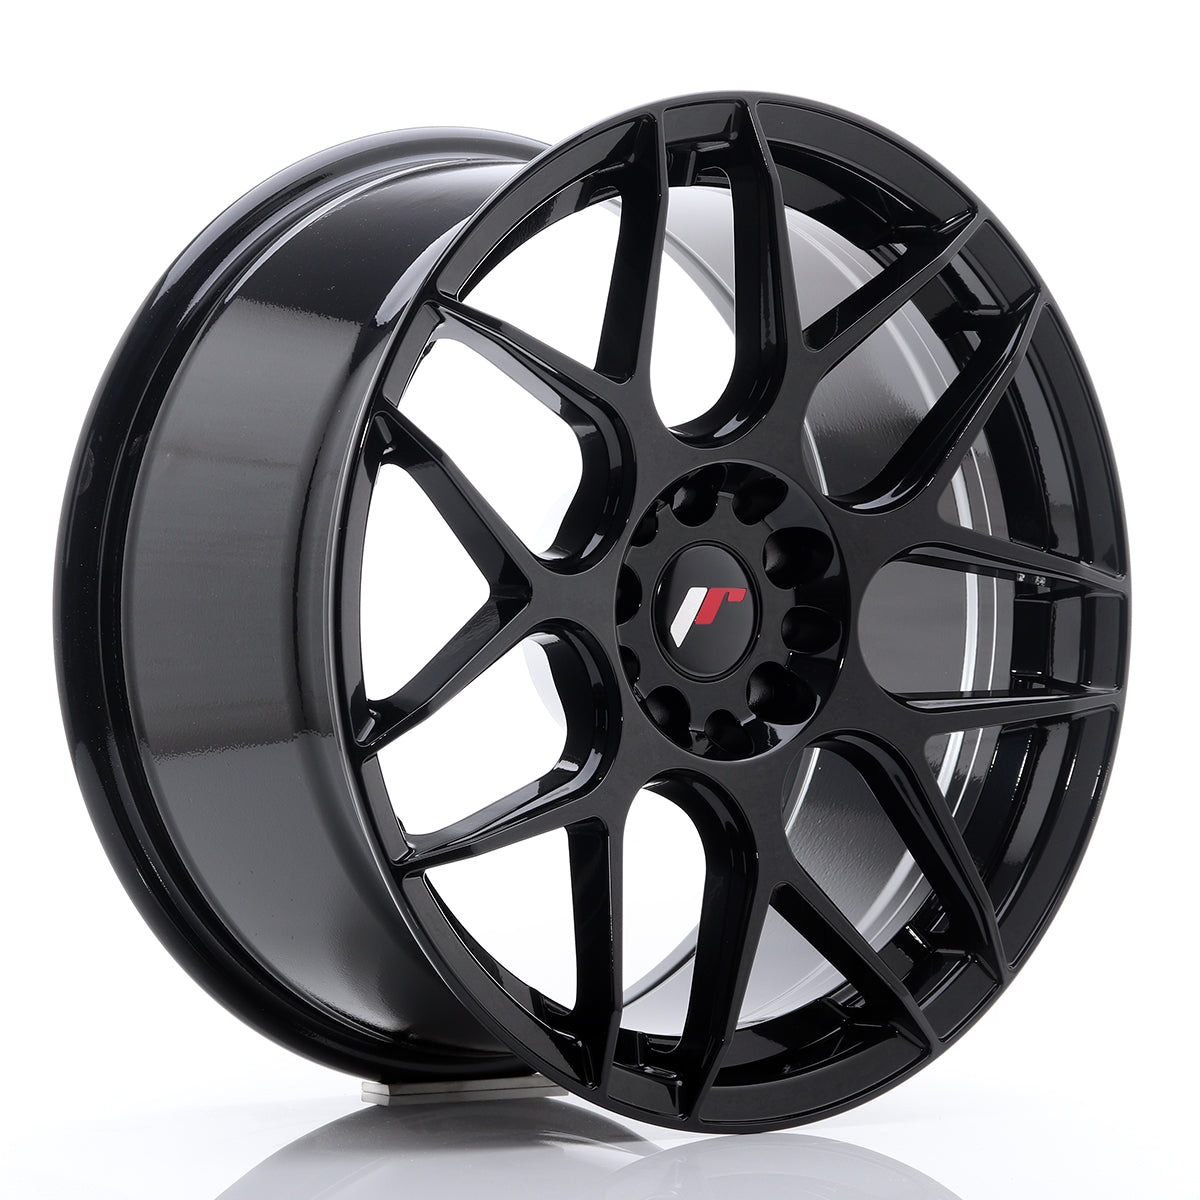 JR Wheels JR18 18x8,5 ET25 5x114/120 Glossy Black